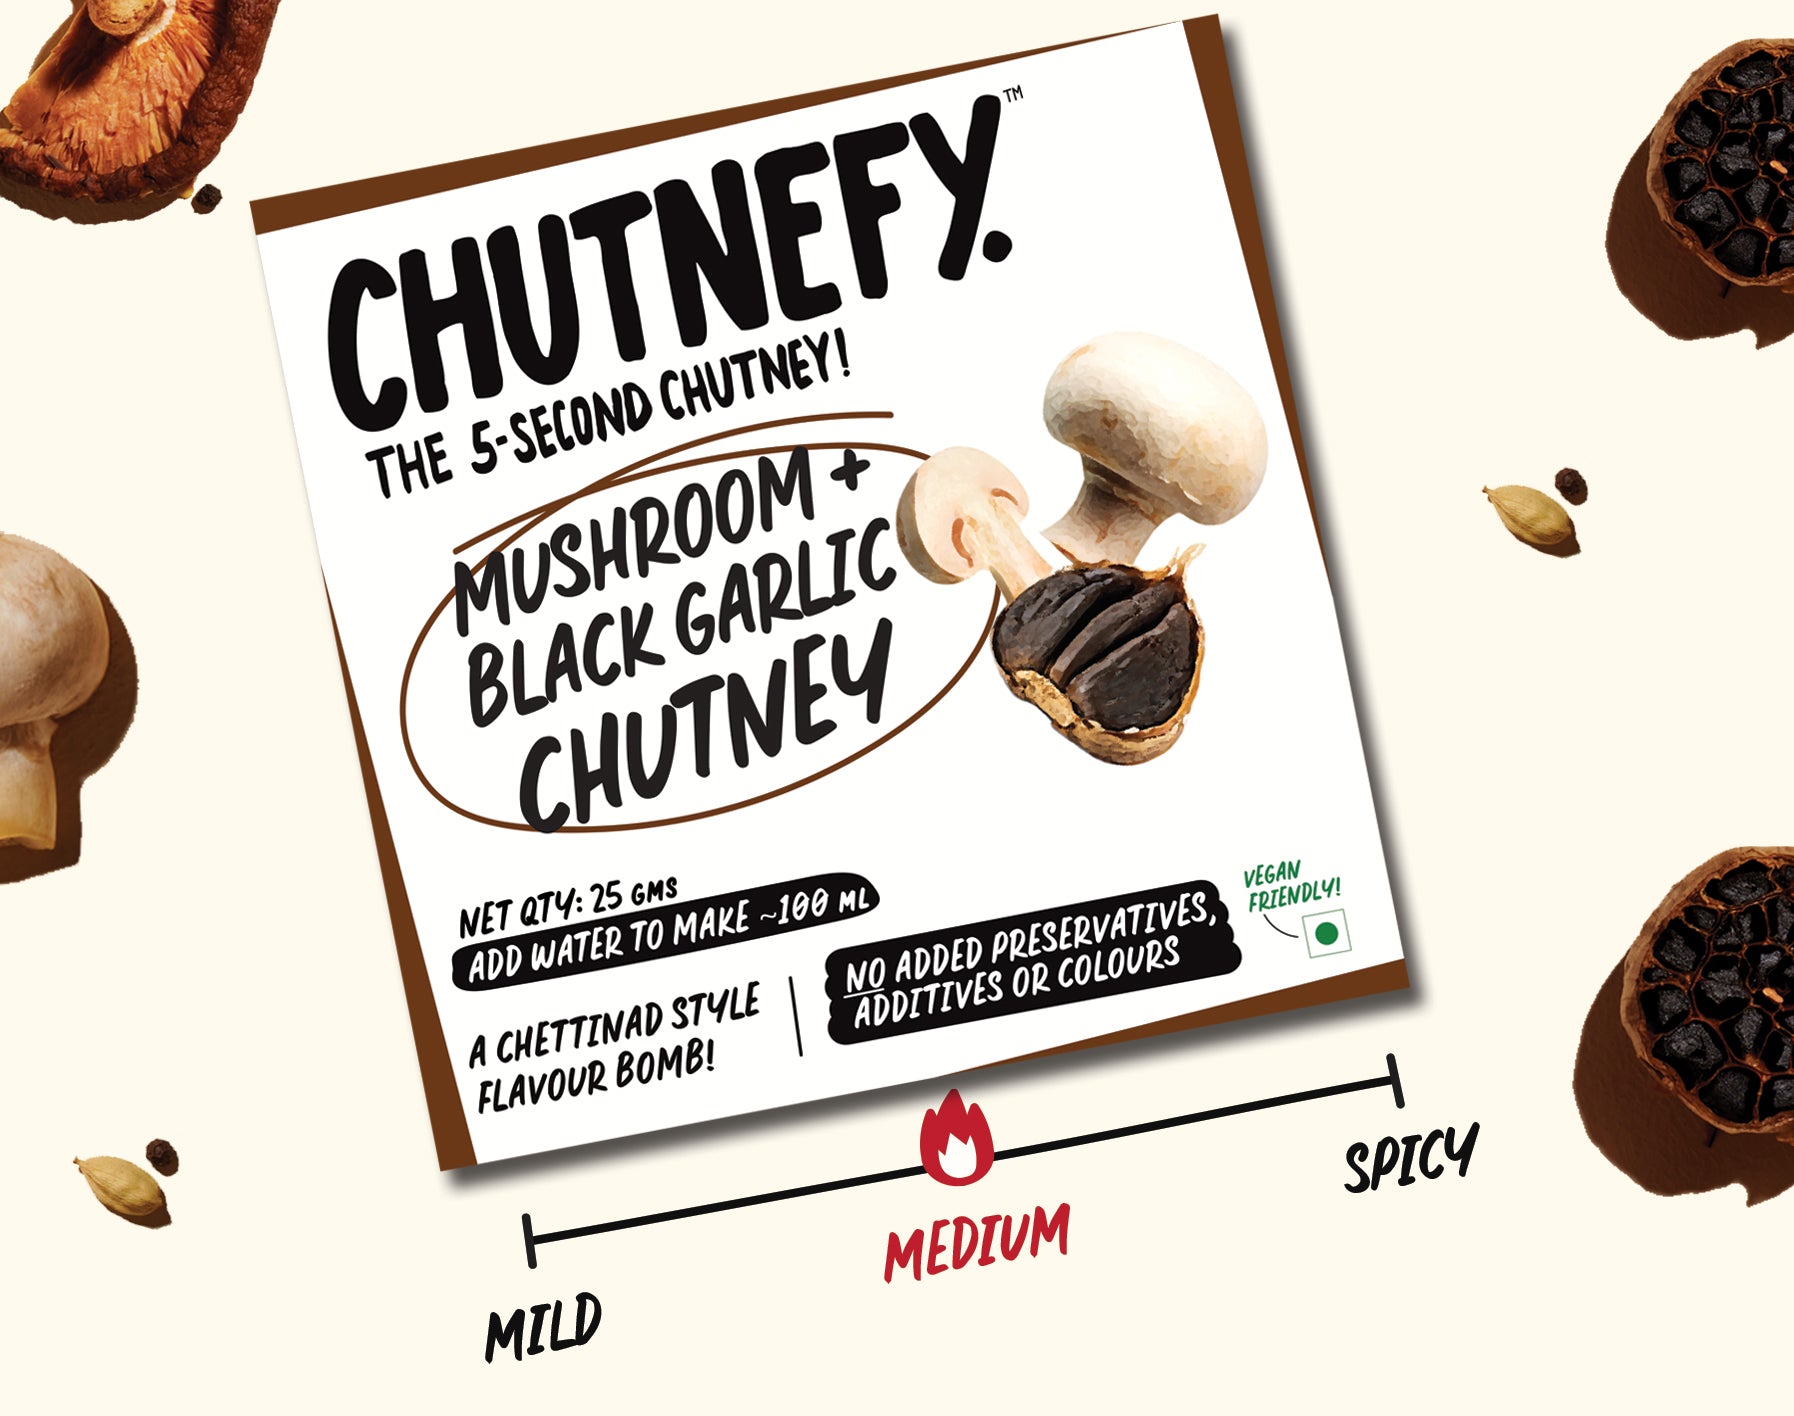 Mushroom & Black Garlic Chutney | Chettinad Style | Medium Spicy